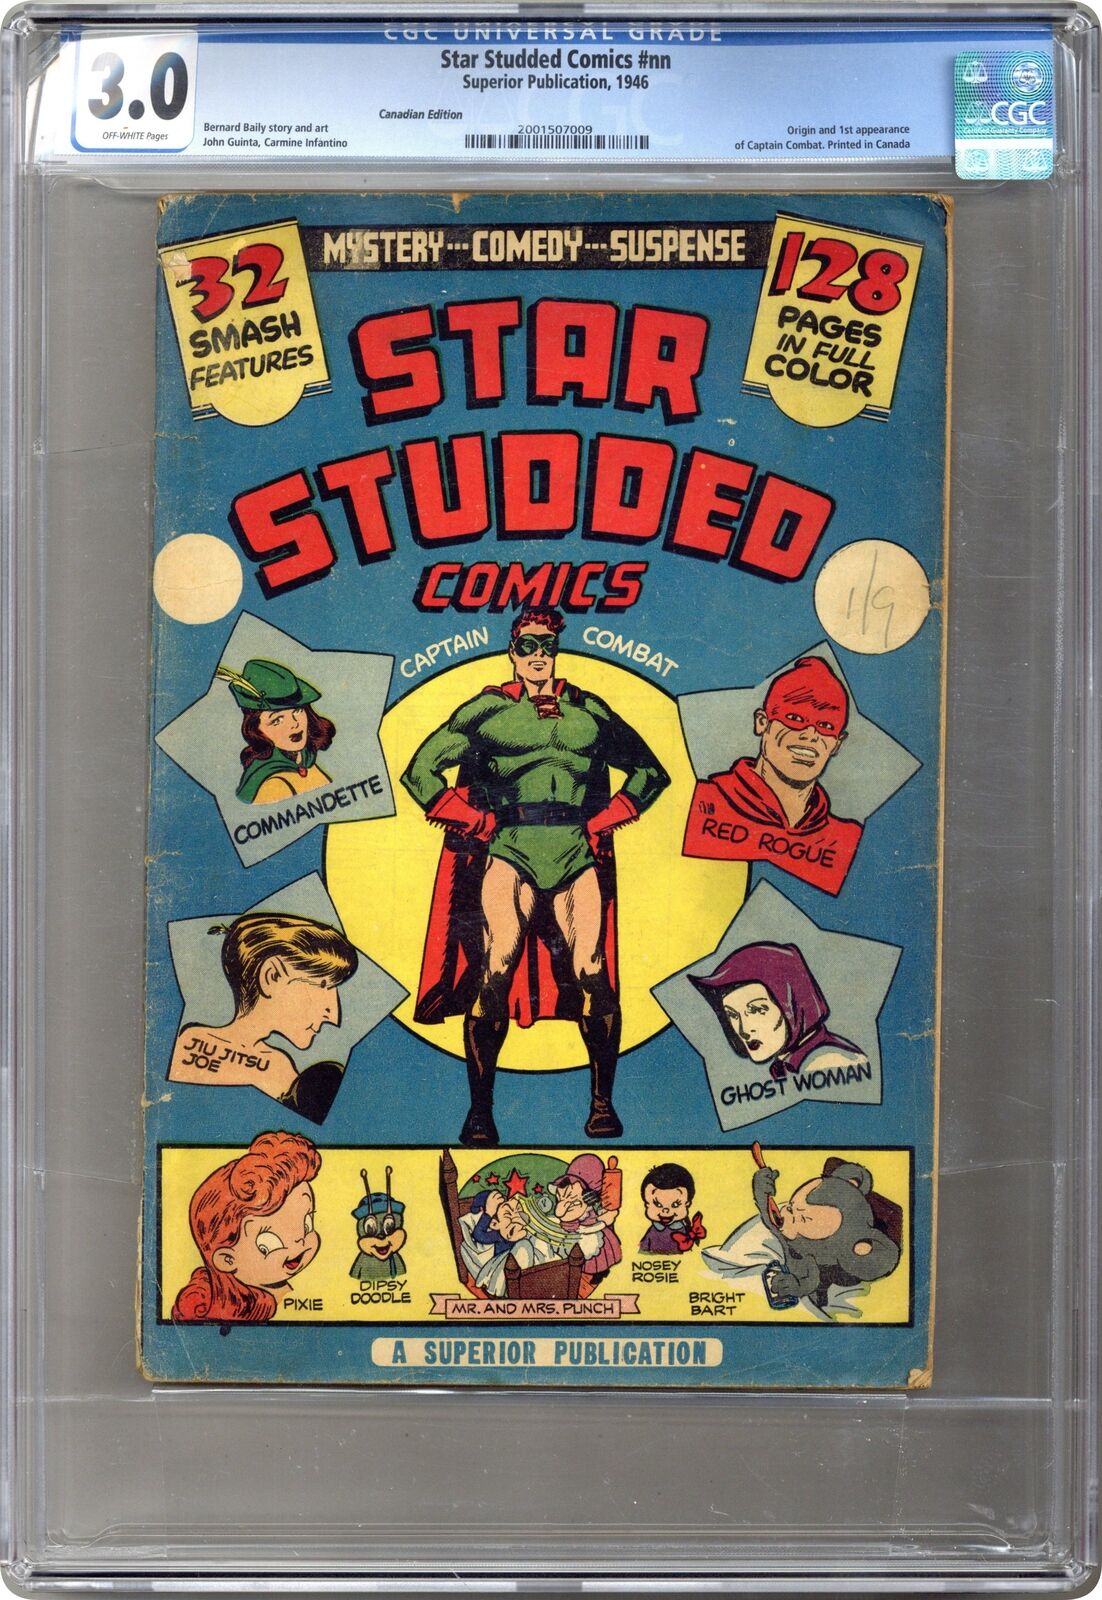 Star Studded Comics #0A CGC 3.0 1945 2001507009